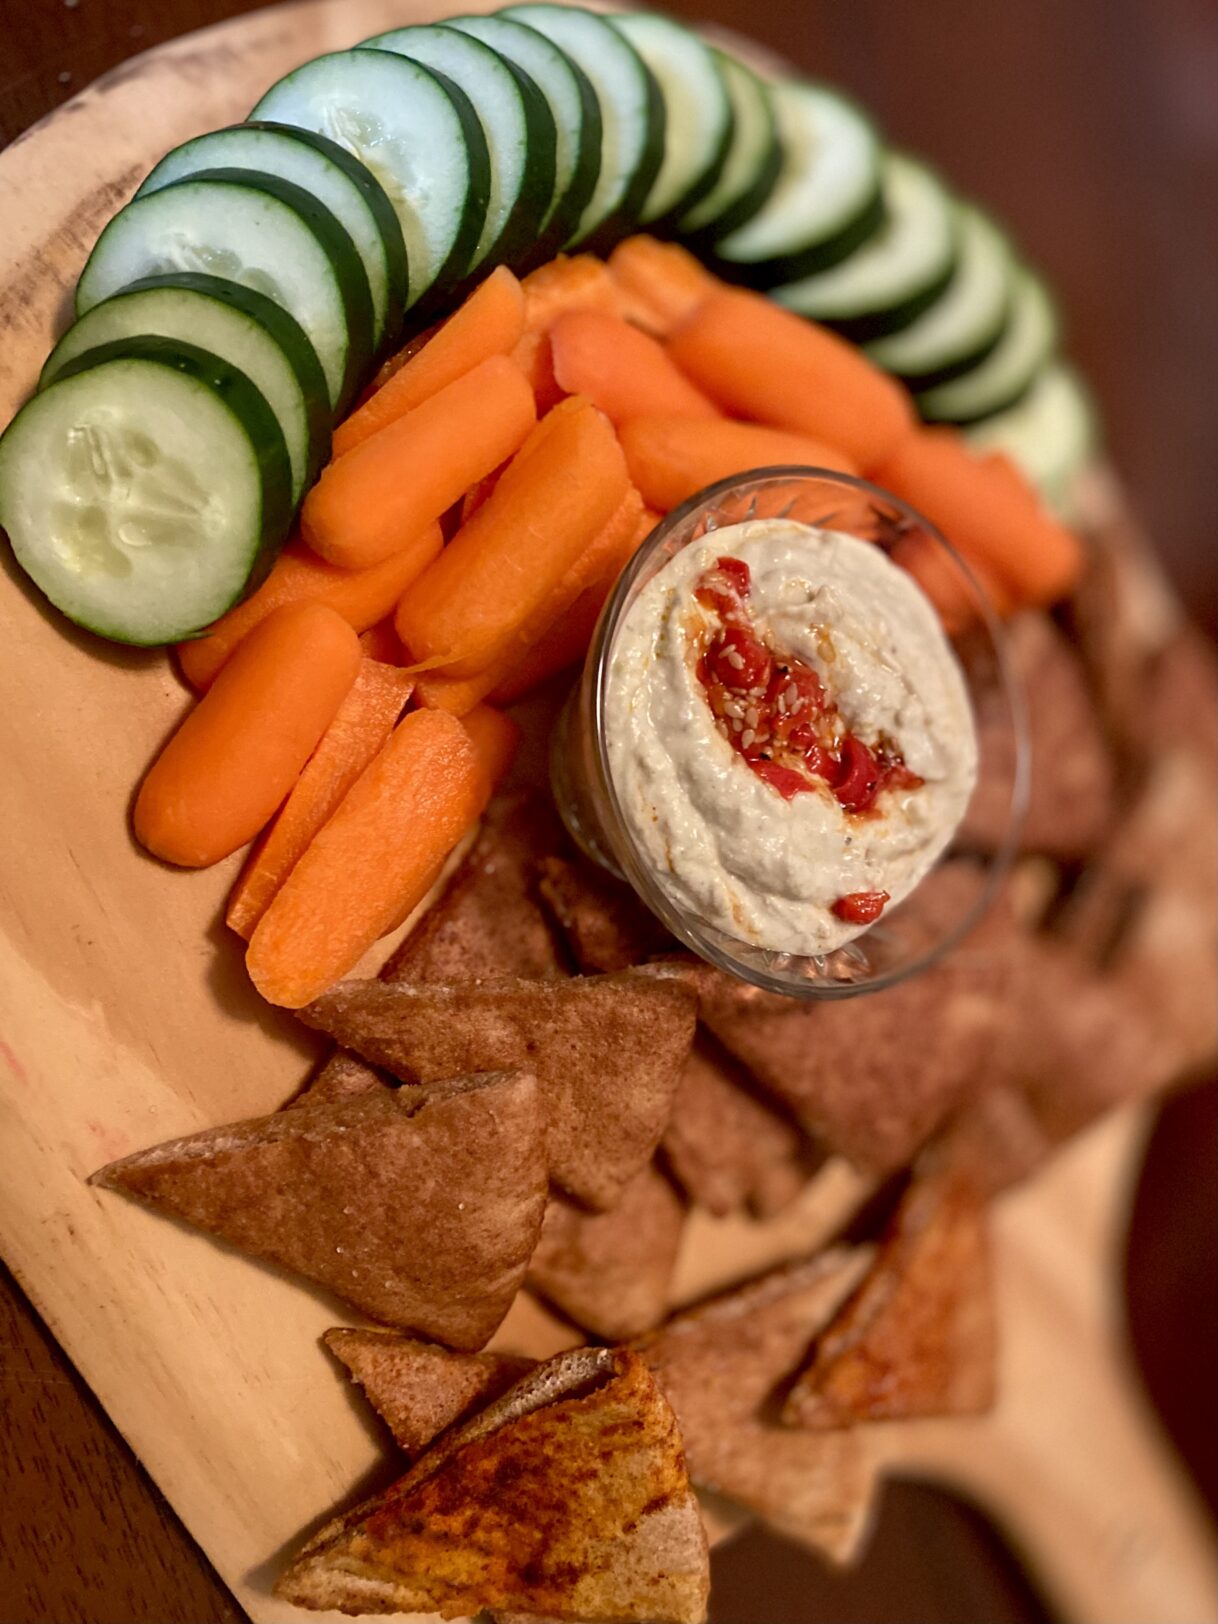 Vegan Snack Ideas: Cucumbers, Carrots, Salted Dill Toasted Pita, and Homemade Edamame Hummus – Athens, Georgia – 12/30/2021